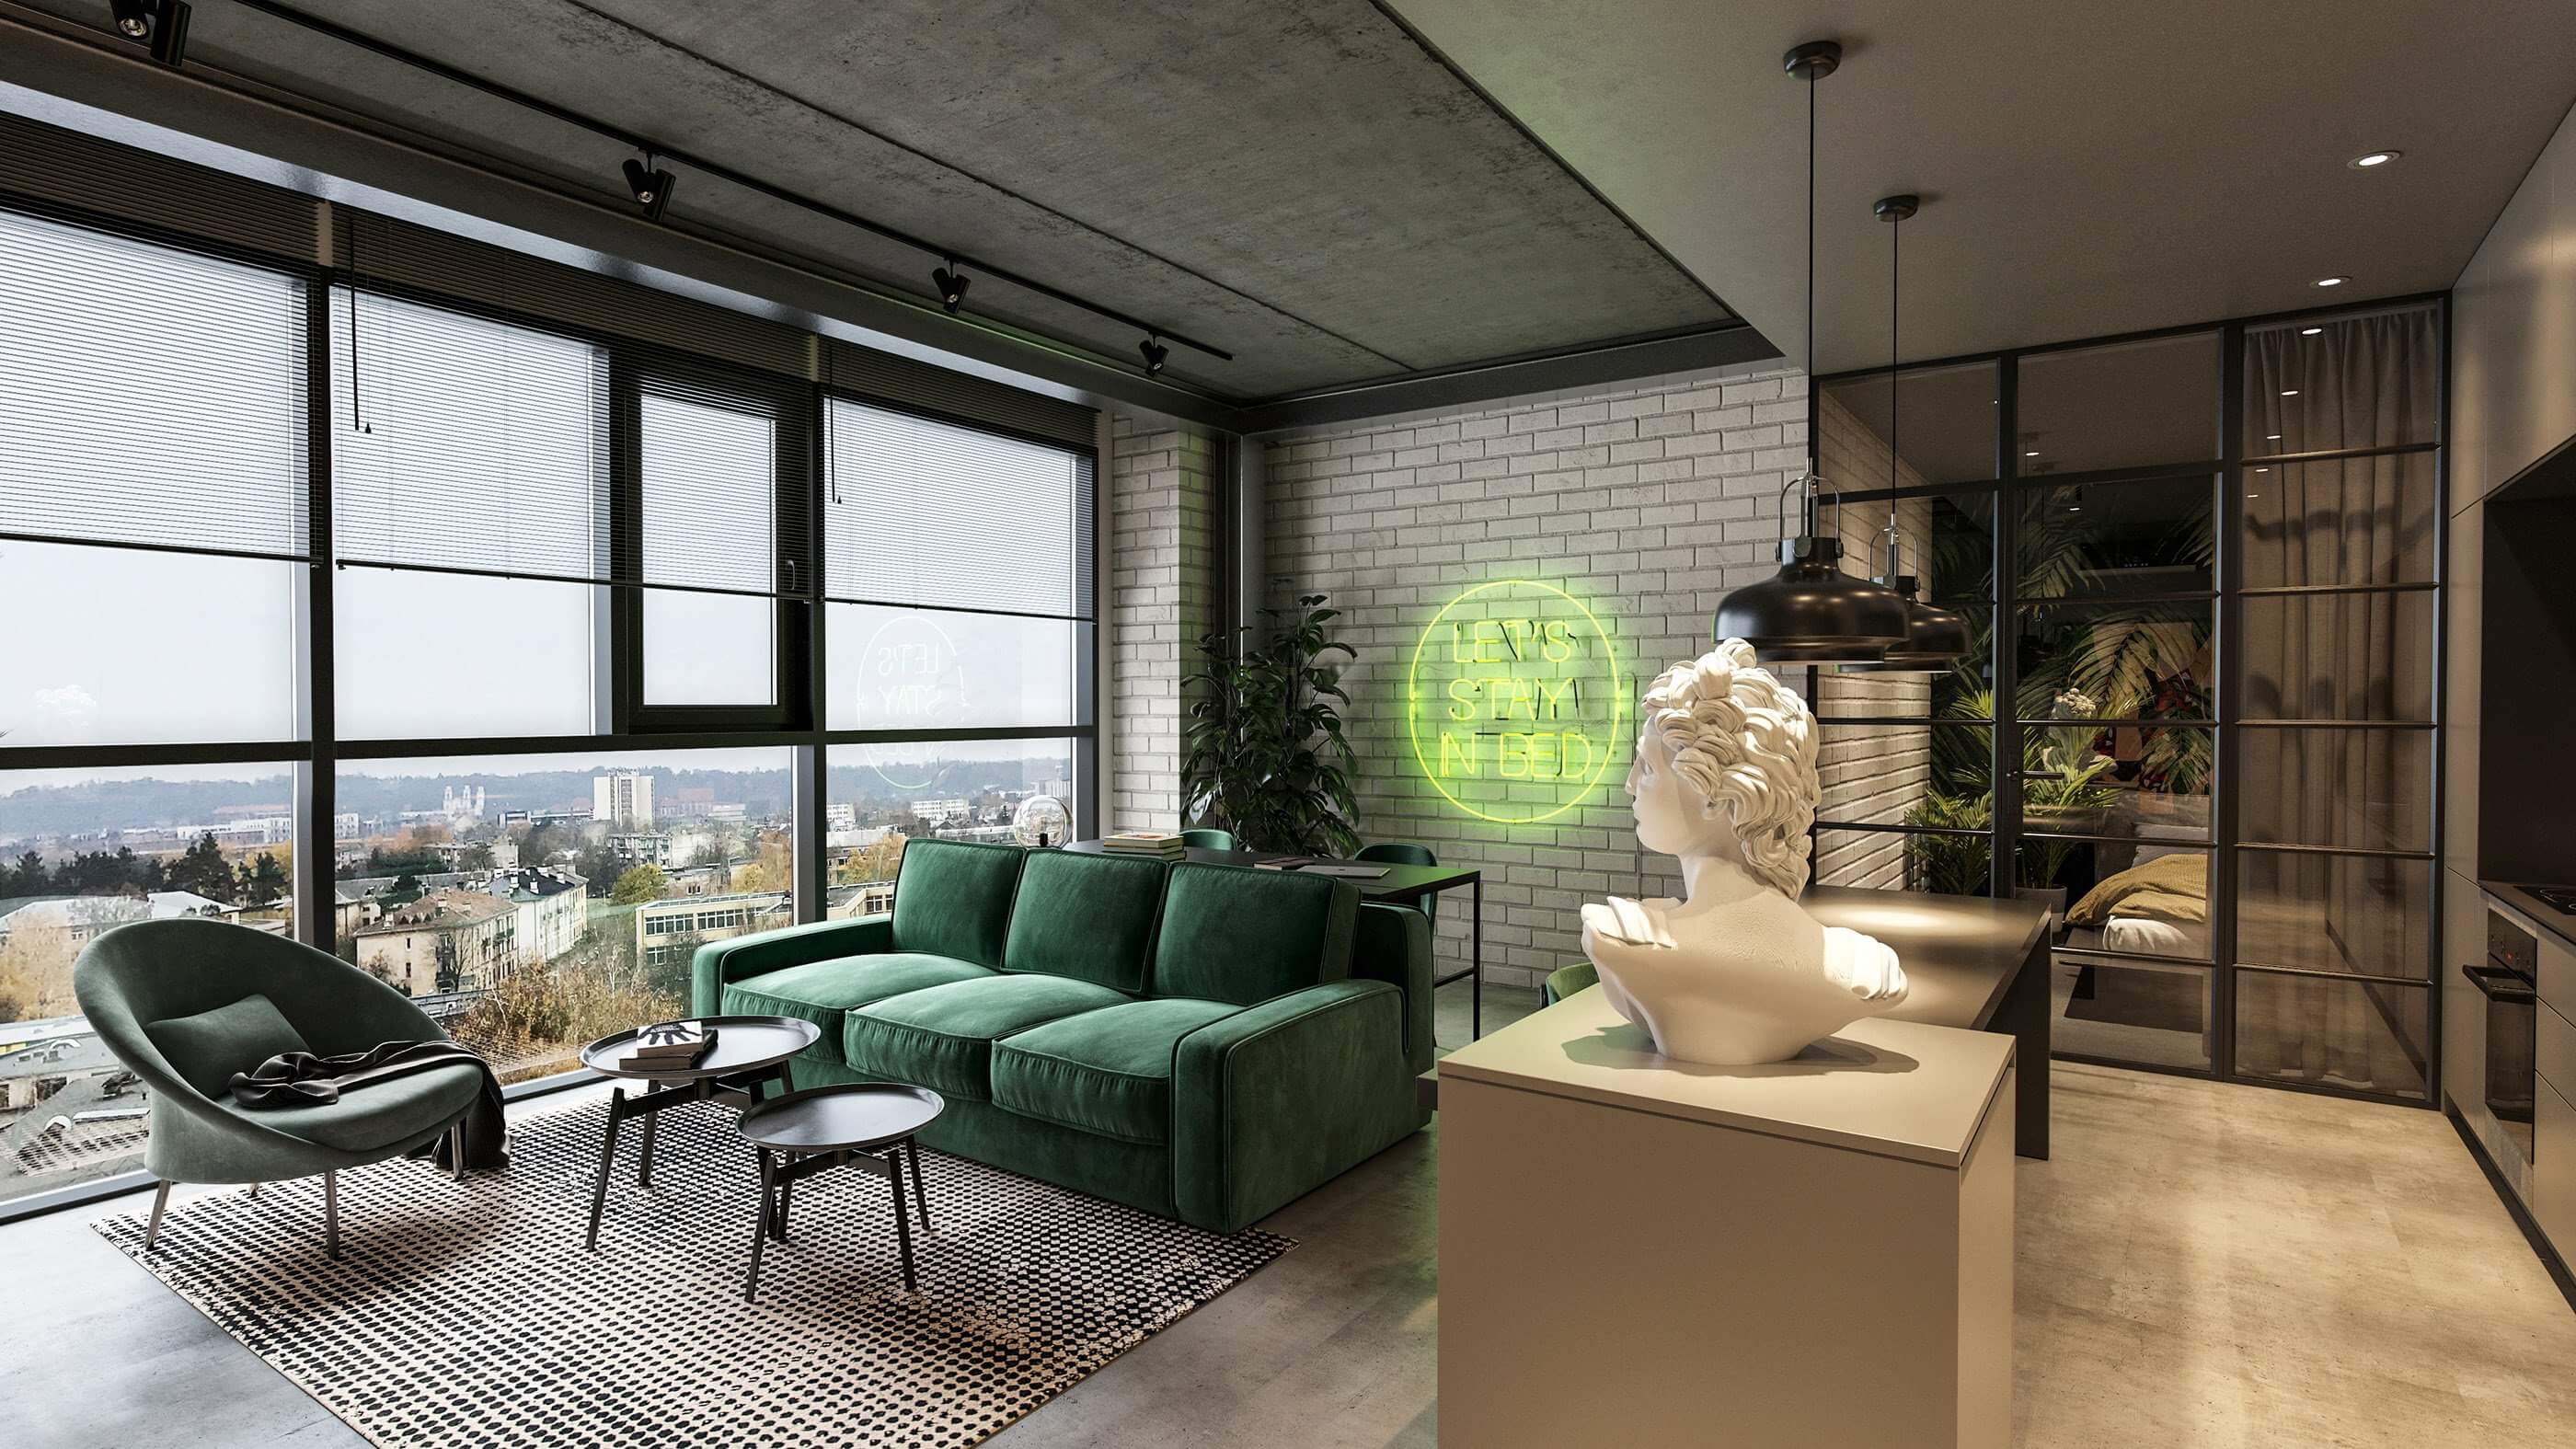 Jungle paradise apartment living room kitchen design - cgi visualization